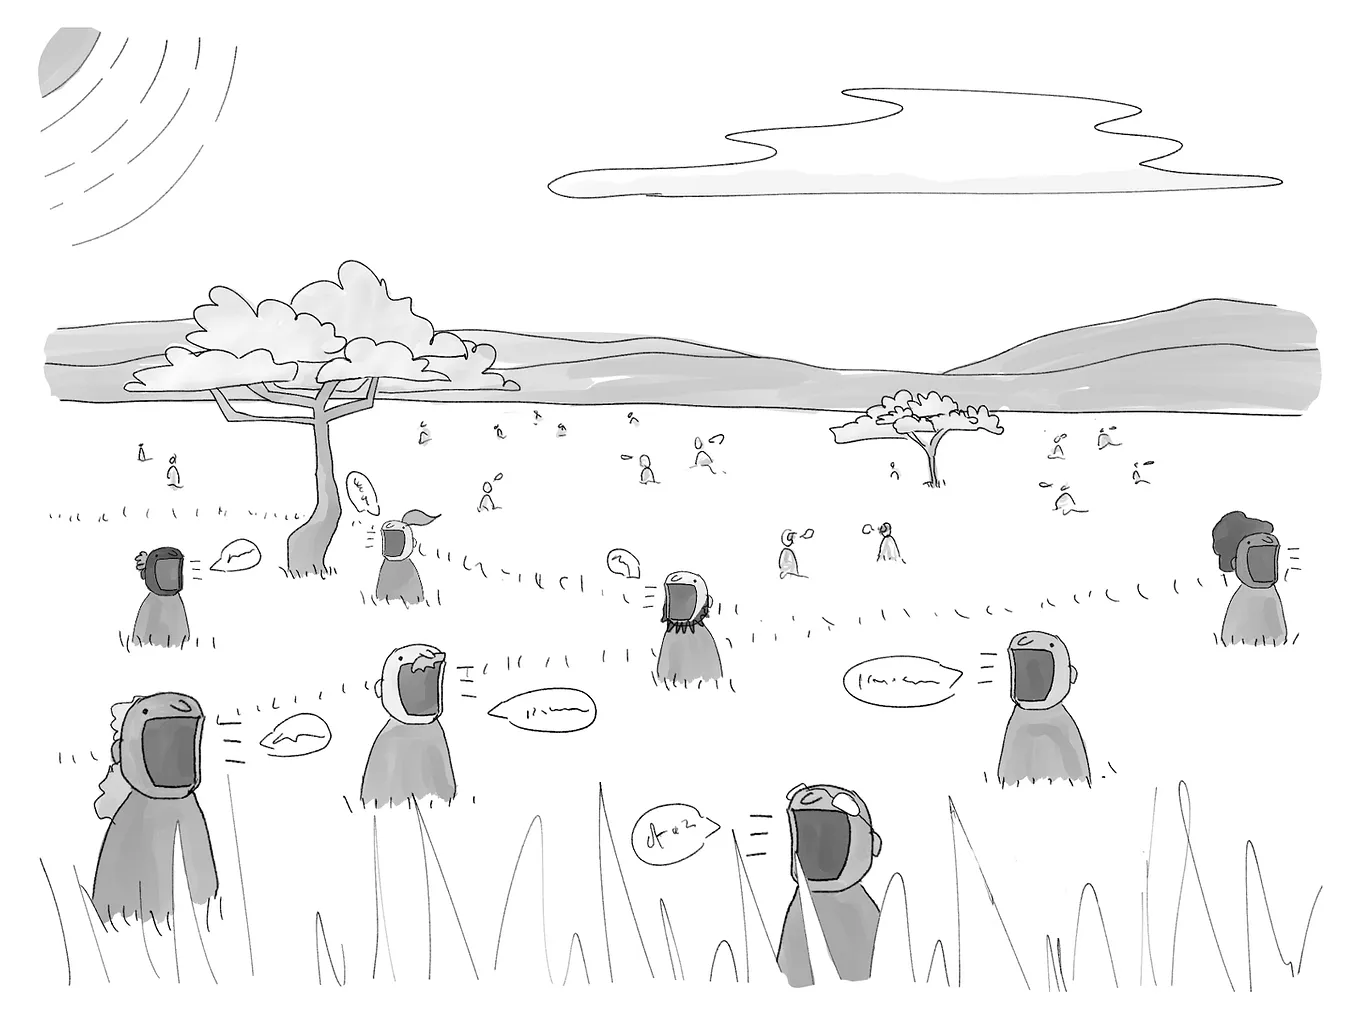 David Attenborough Illustrates The Great Twitter Flight